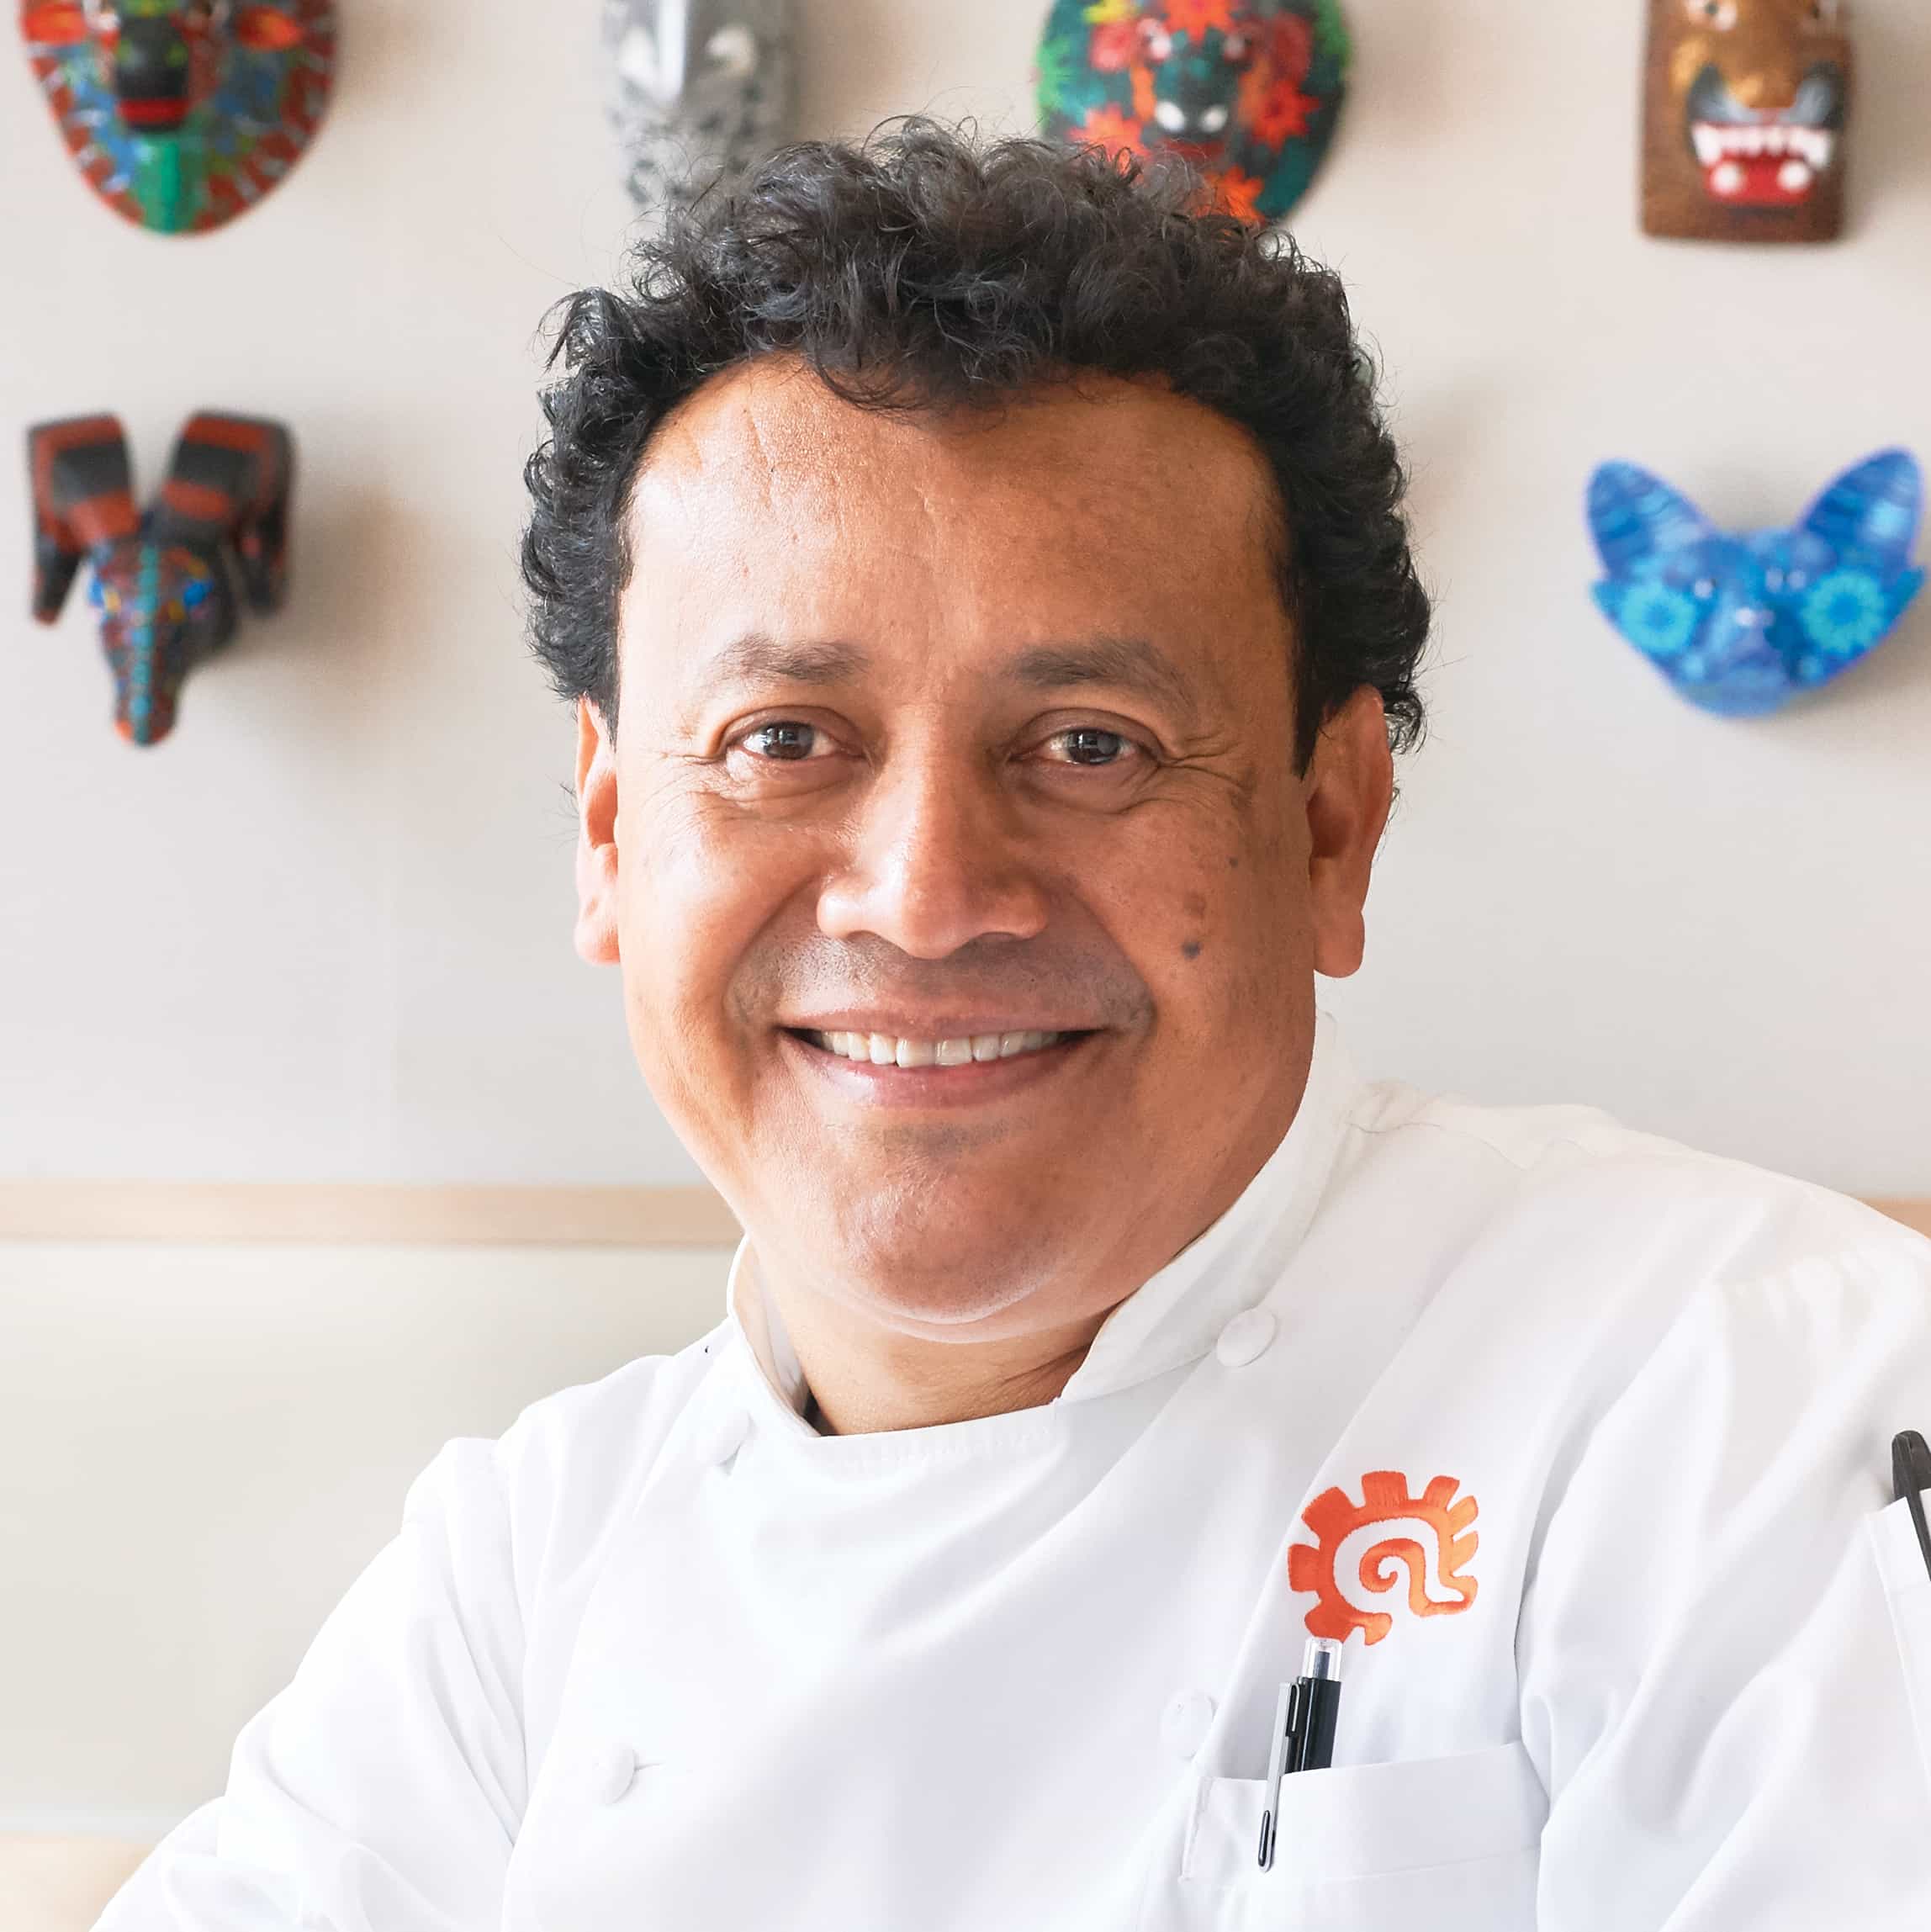 Chef Hugo Ortega